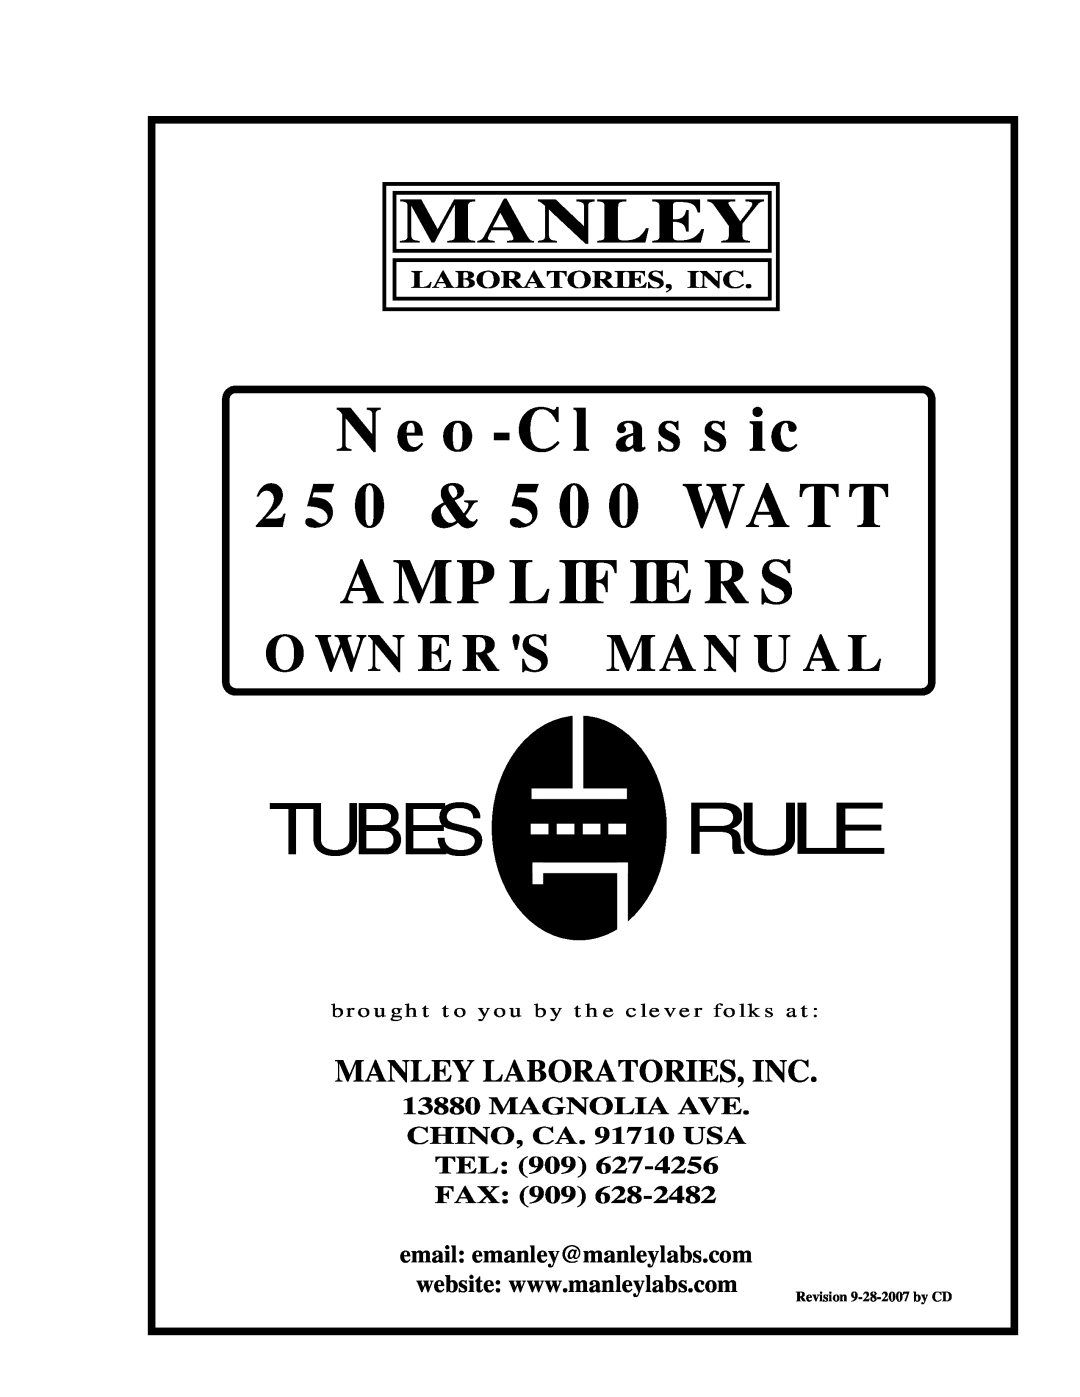 Manley Labs owner manual Tubes Rule, Neo-Classic 250 & 500 WATT AMPLIFIERS, Manley Laboratories, Inc 